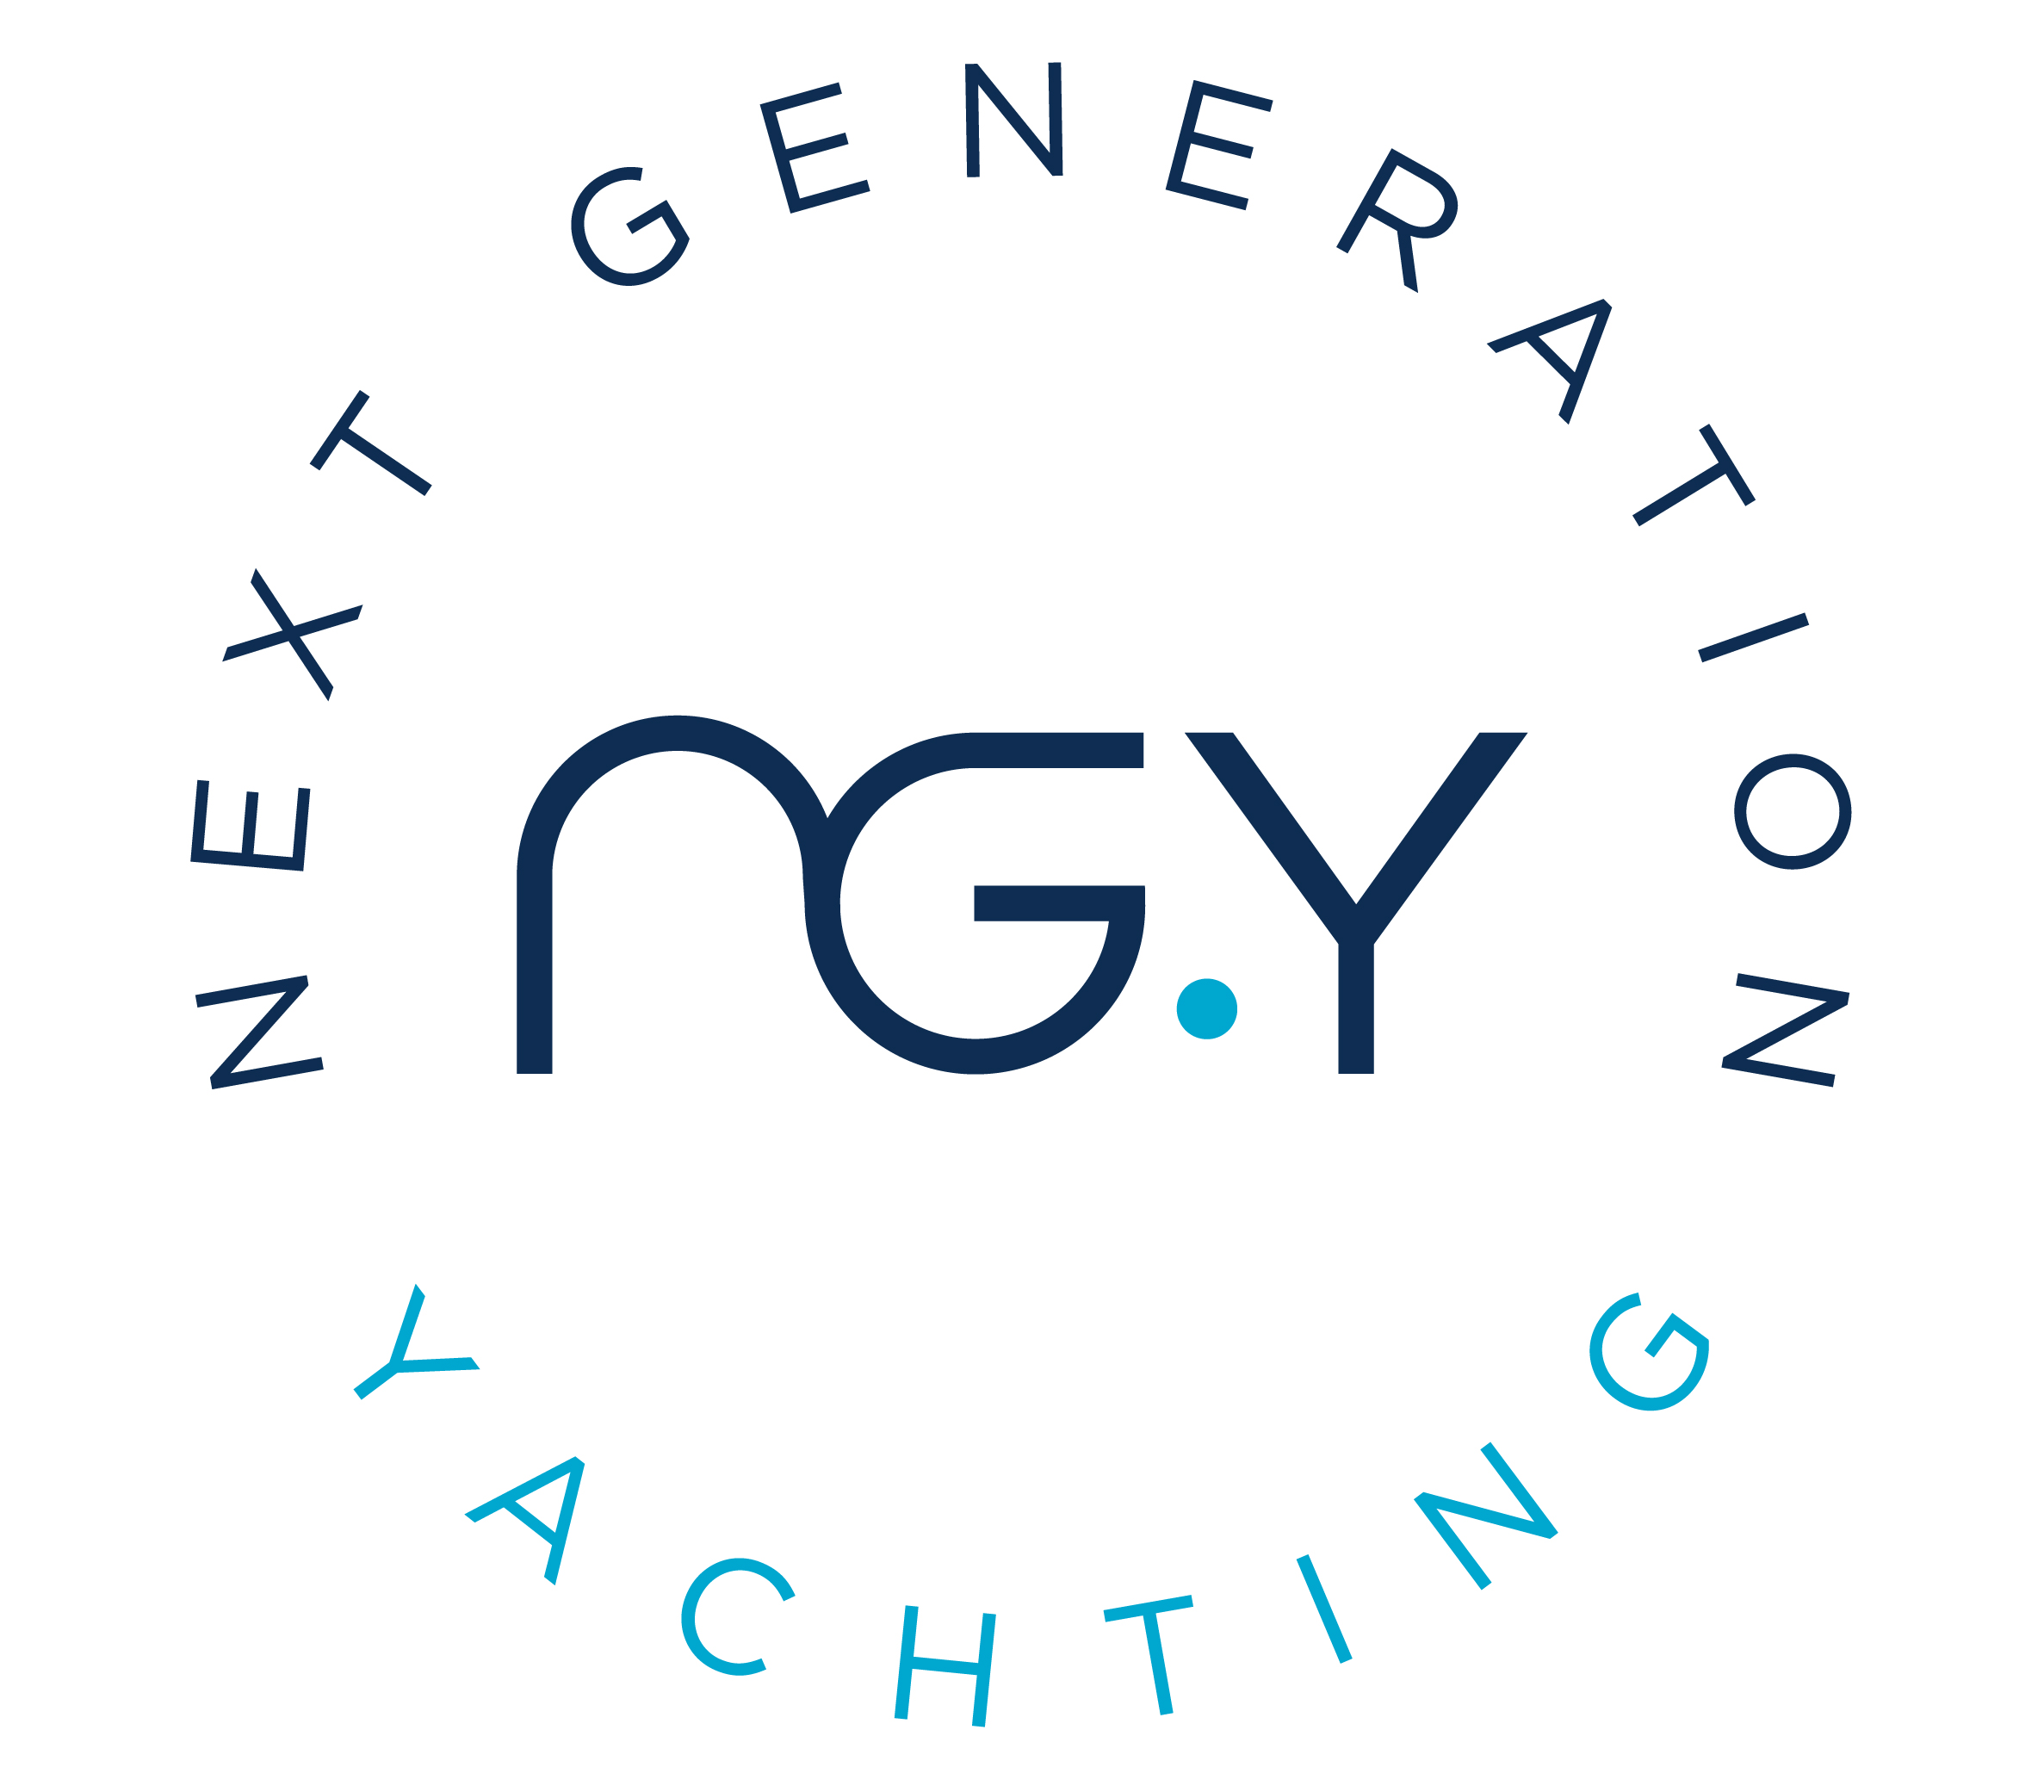 Next Generation Yachting